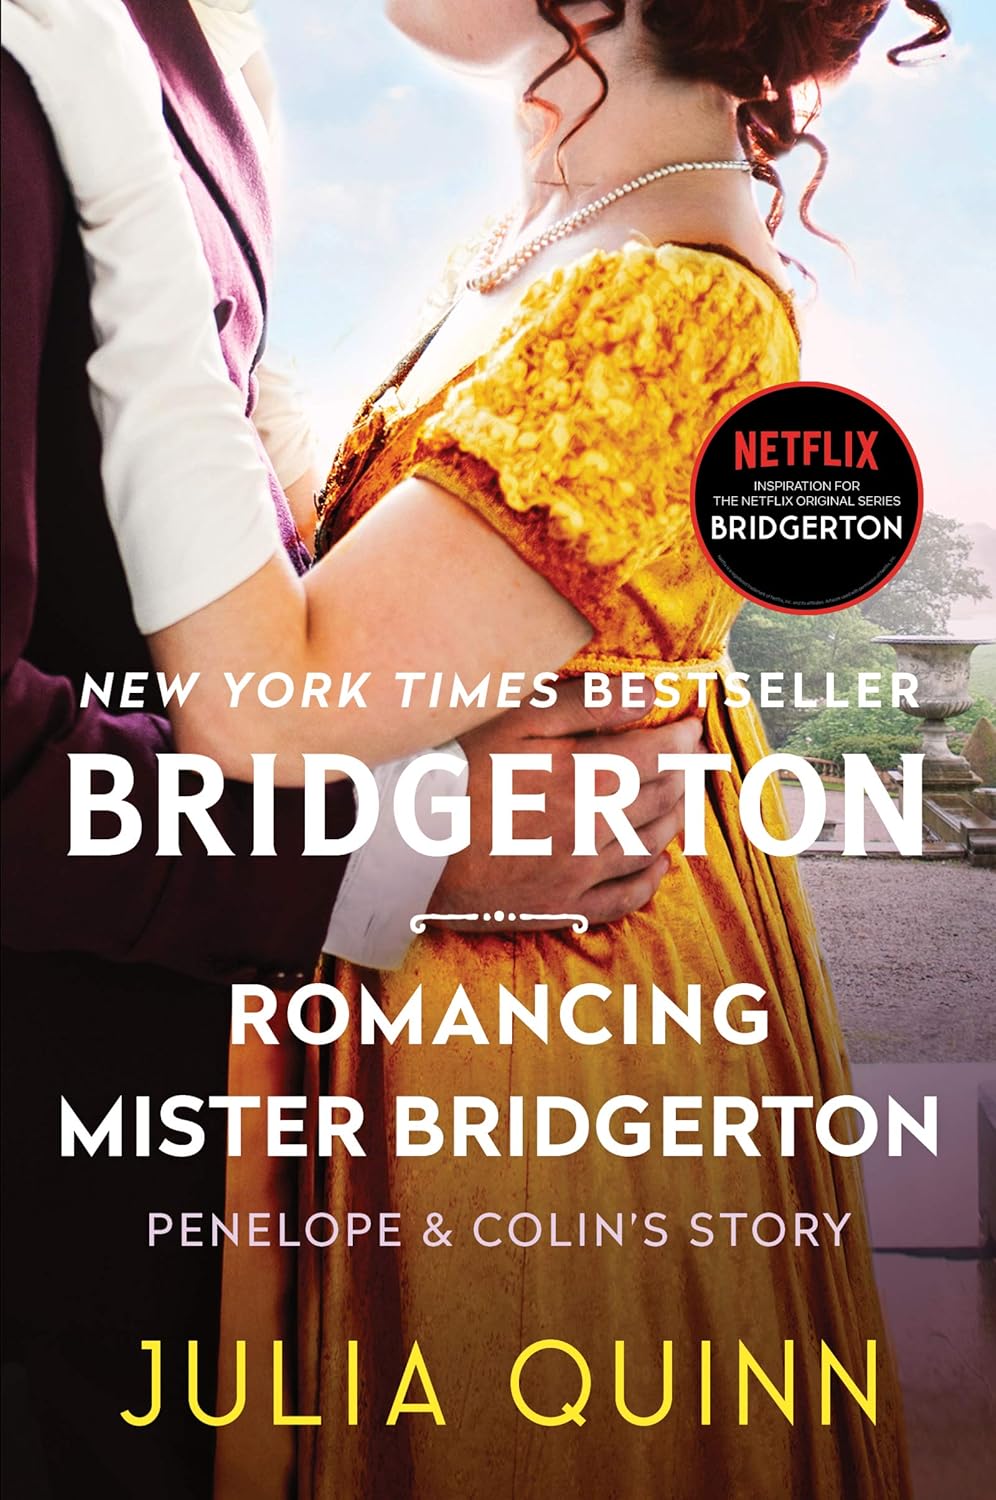 Romancing Mister Bridgerton Penelope & Colin's Story